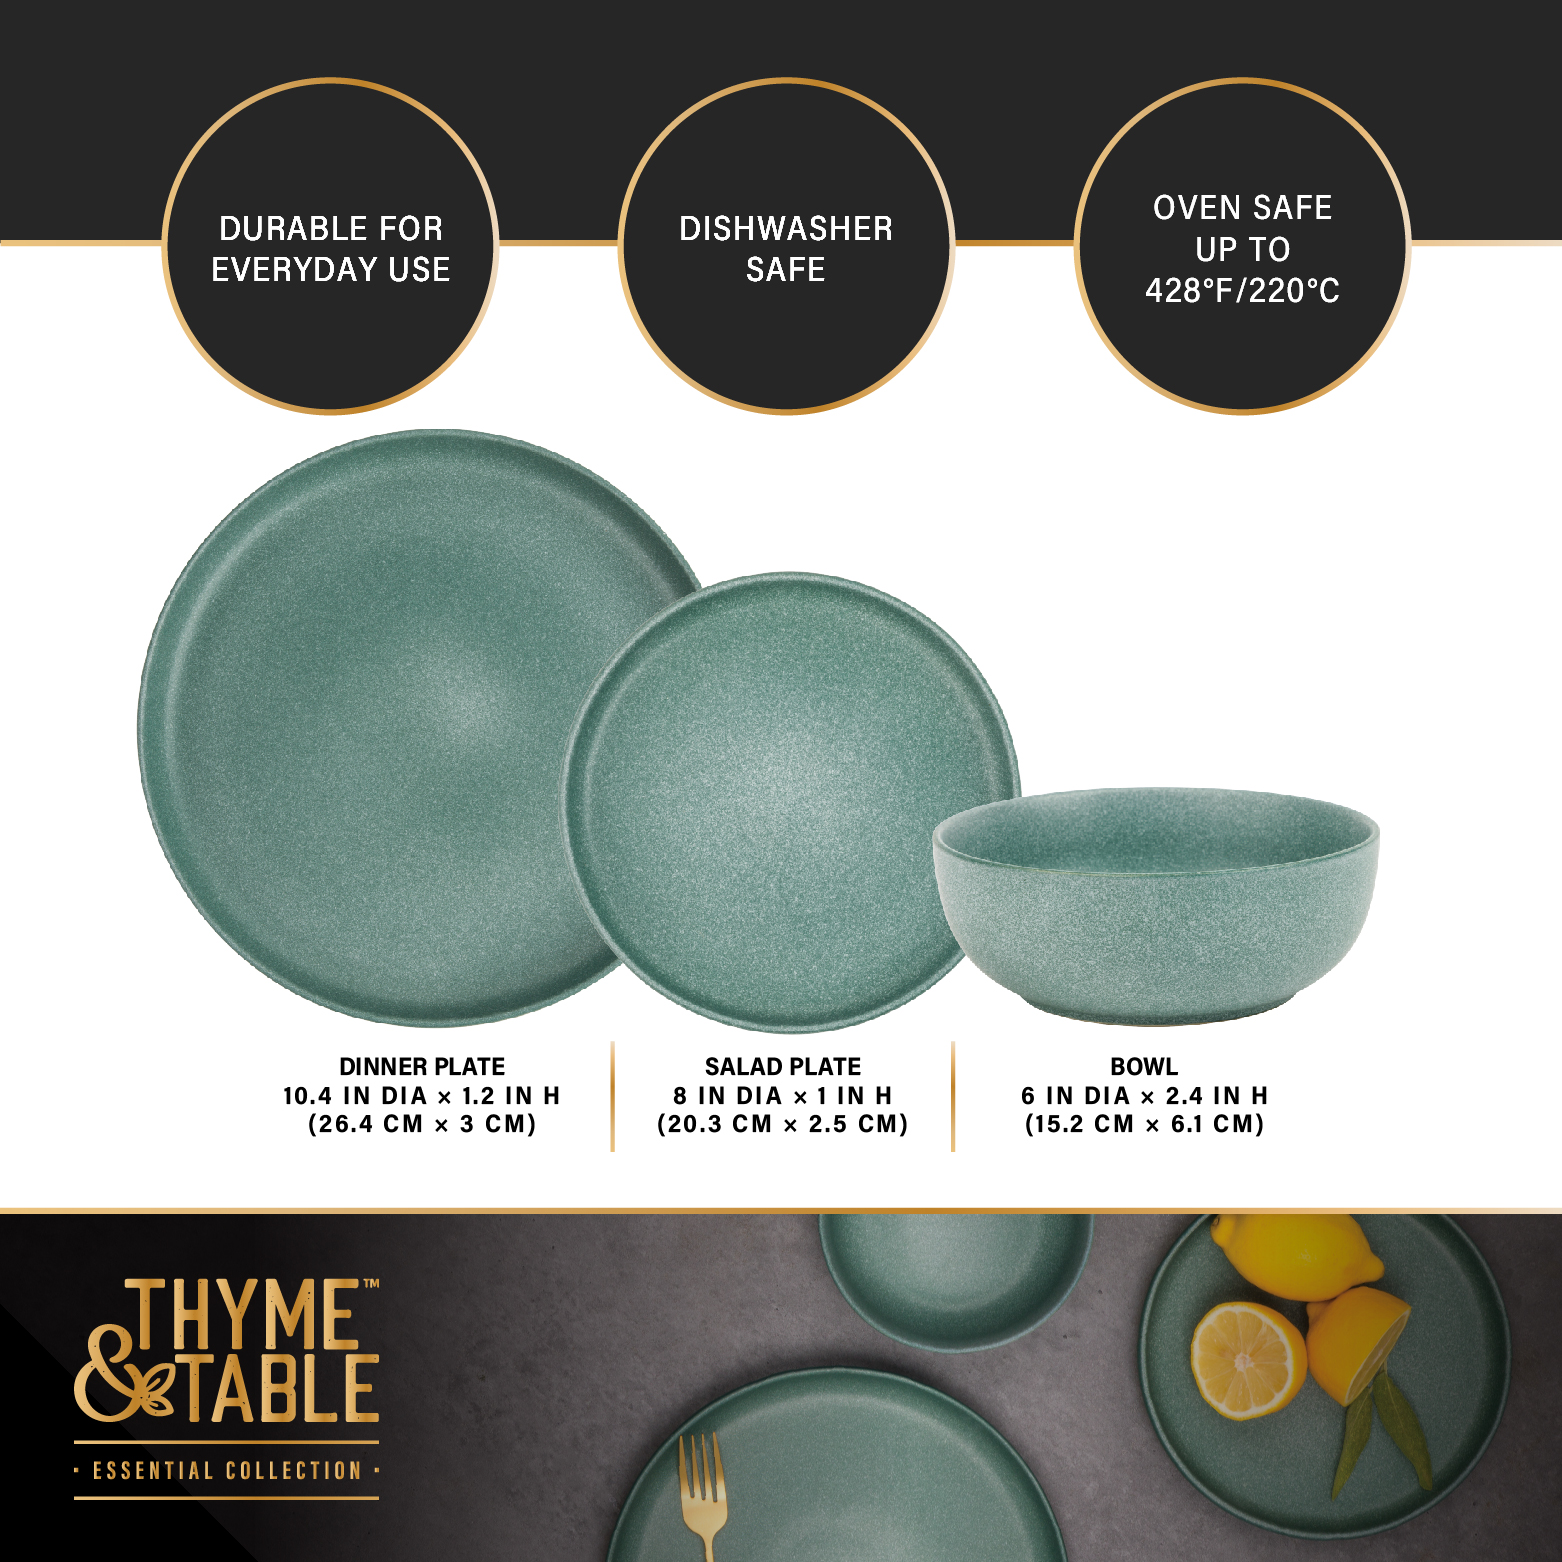 Thyme & Table 12-Piece Stoneware Dinnerware Set, Caspian Green - image 4 of 6